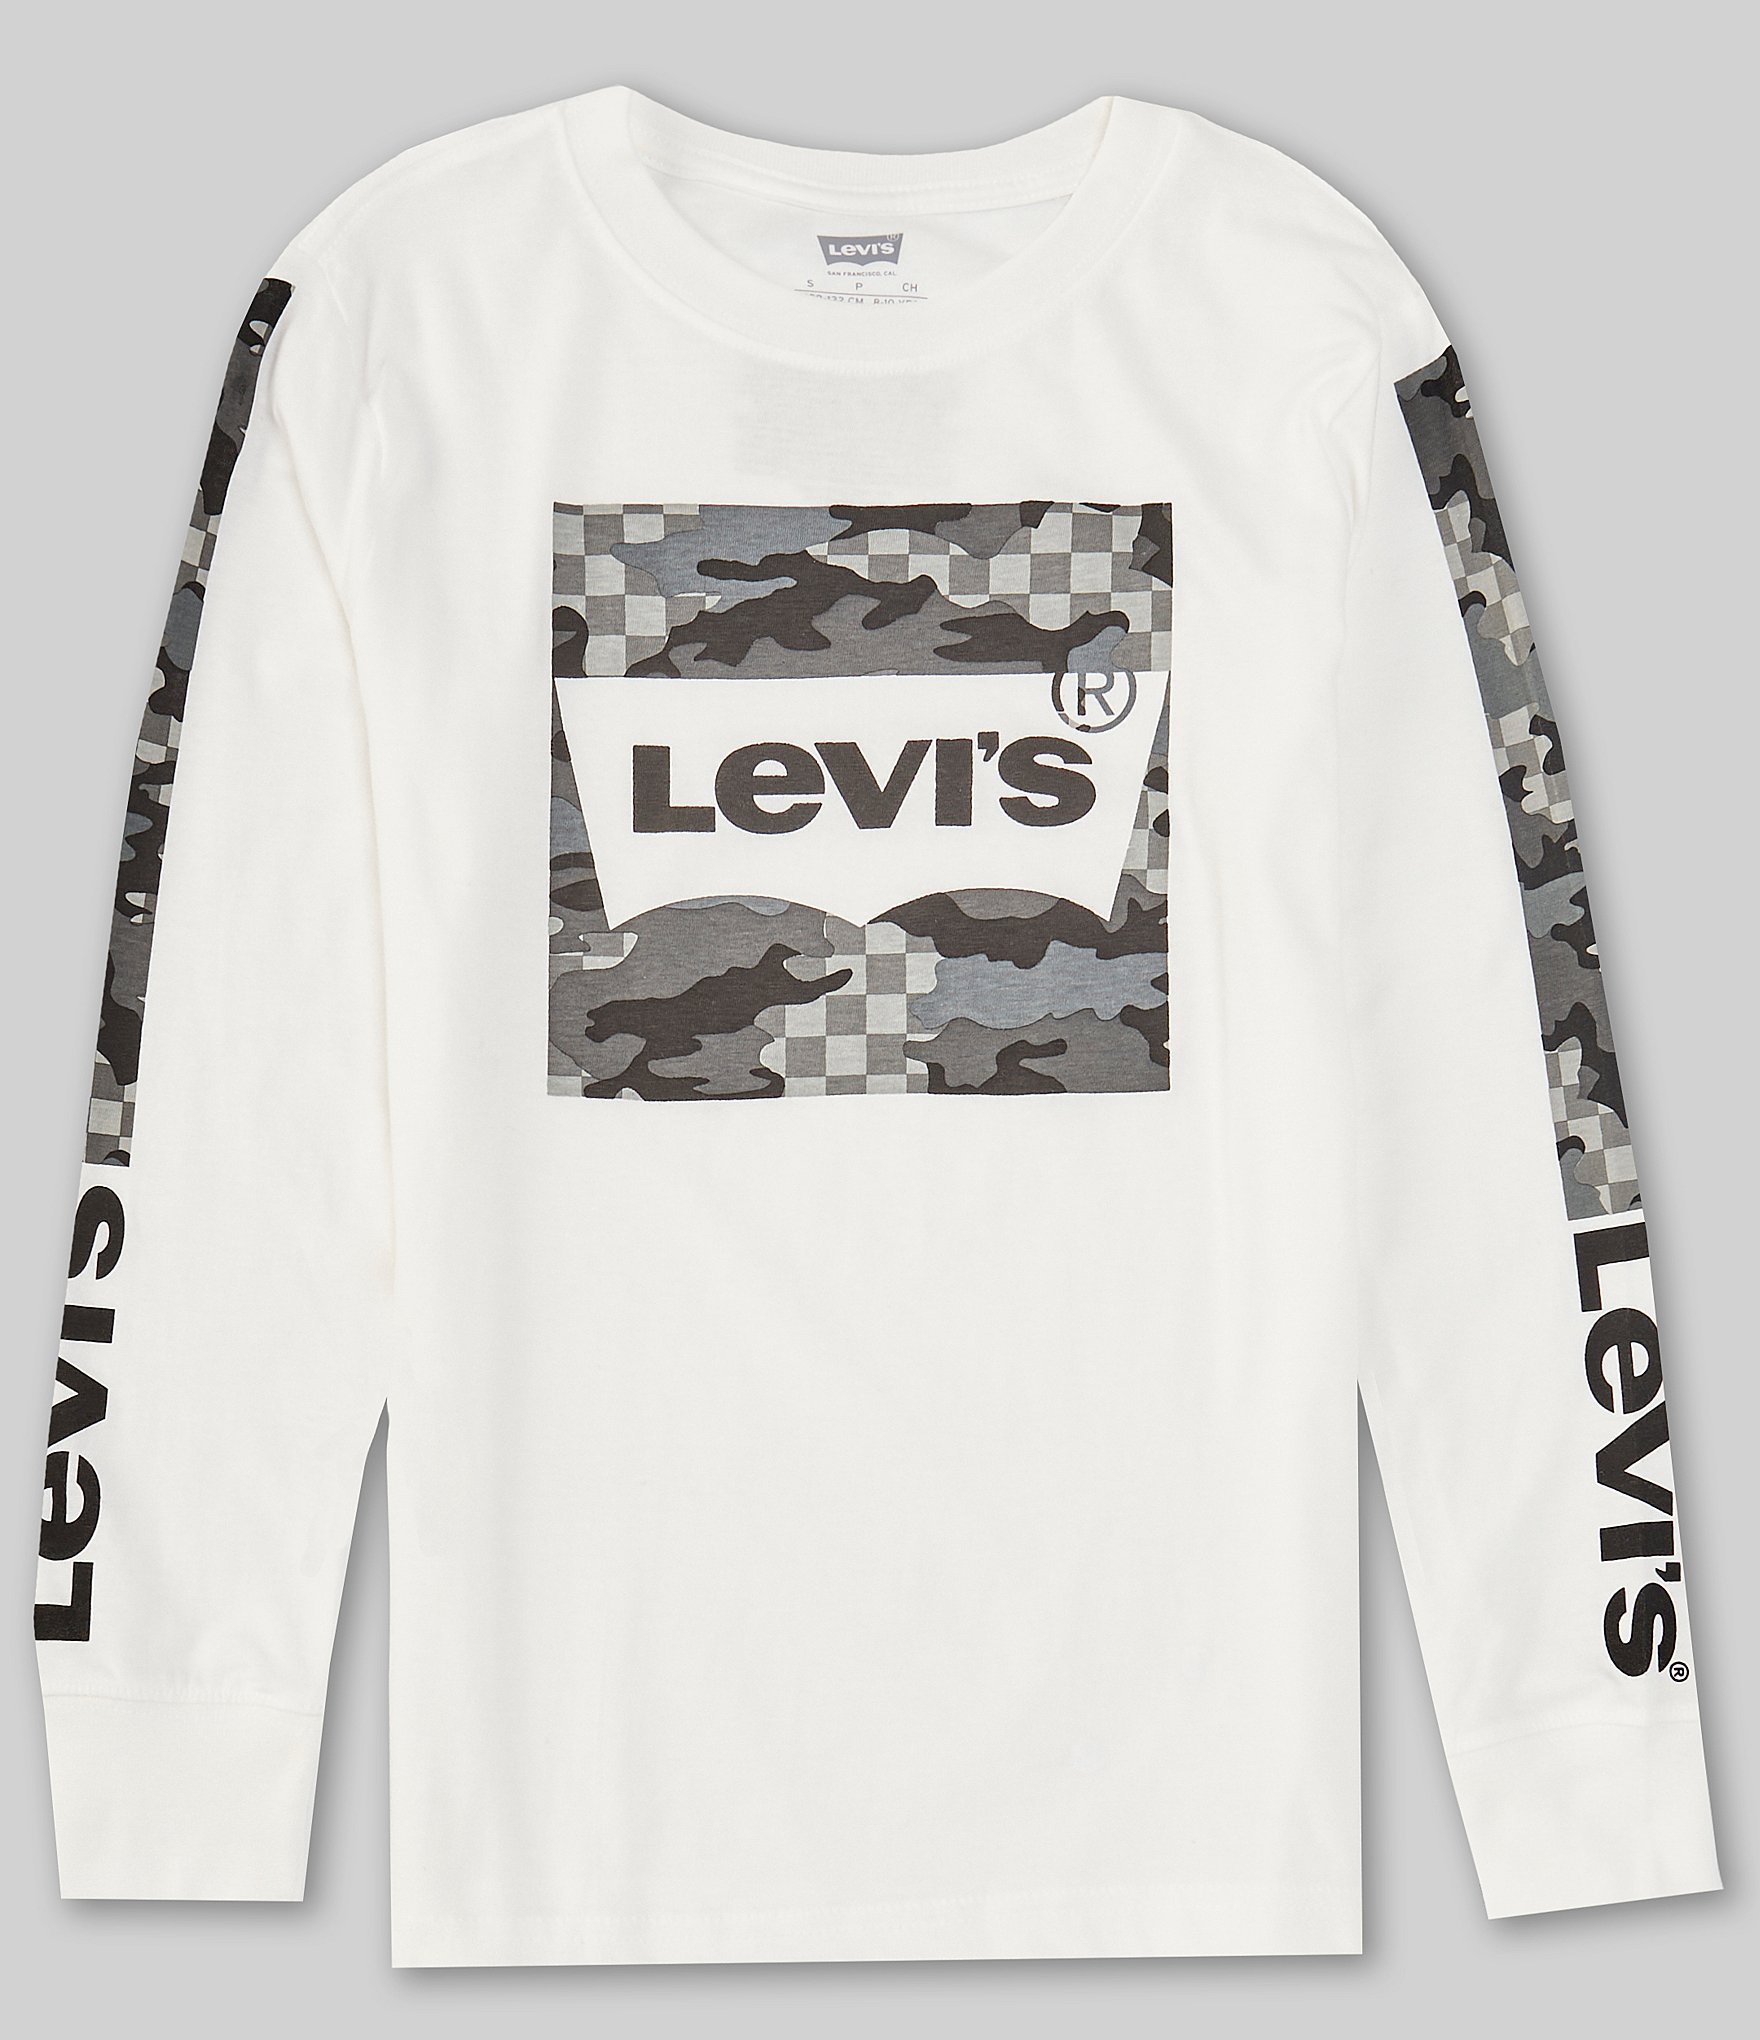 Levi's Men's Long-Sleeve Camo Logo T-Shirt Black Size Small